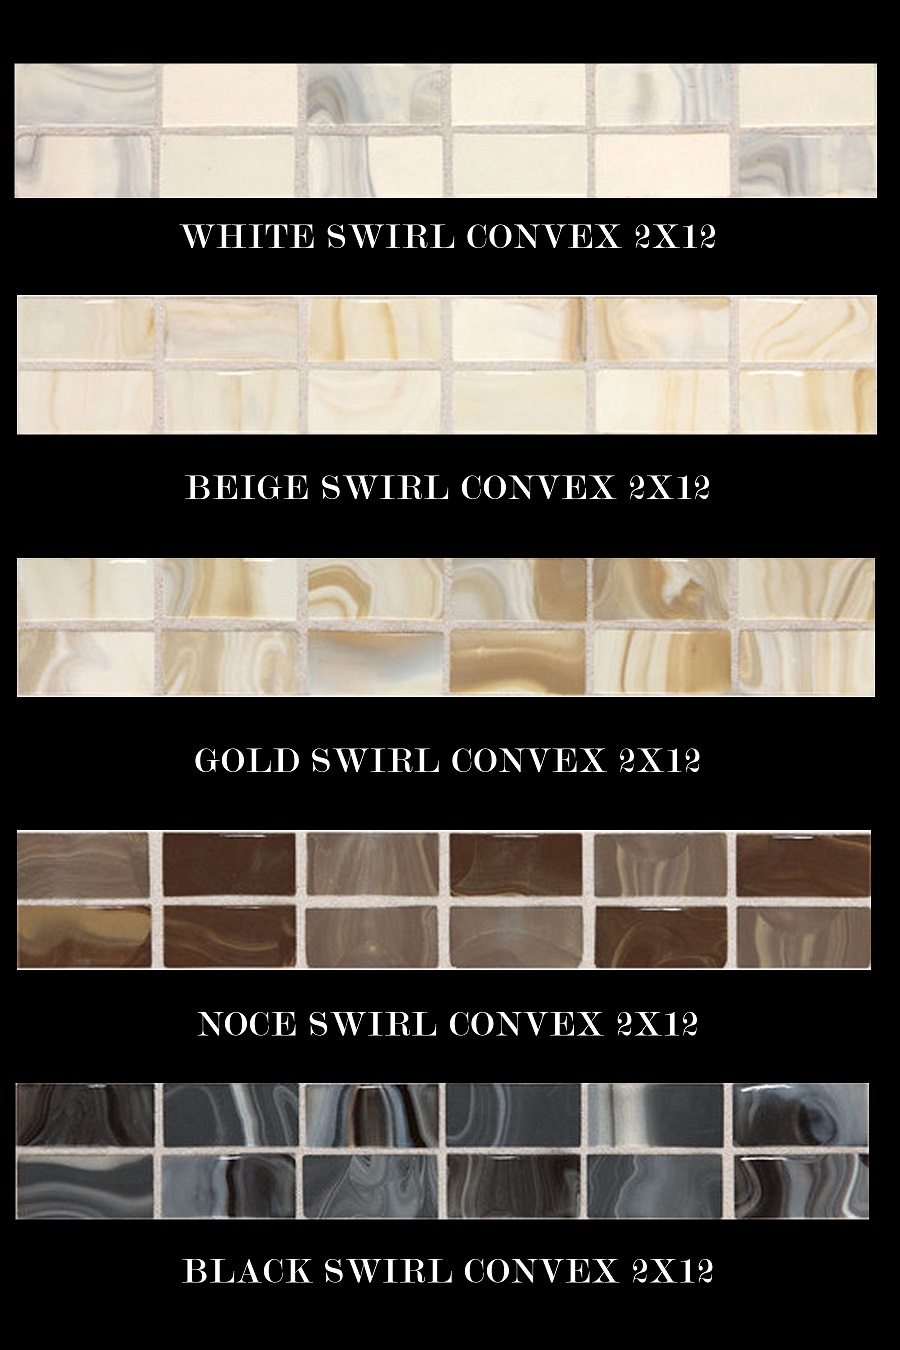 Provincial 2x12 accent strip daltile fashion accents white beige gold noce black marble swirls movement soft